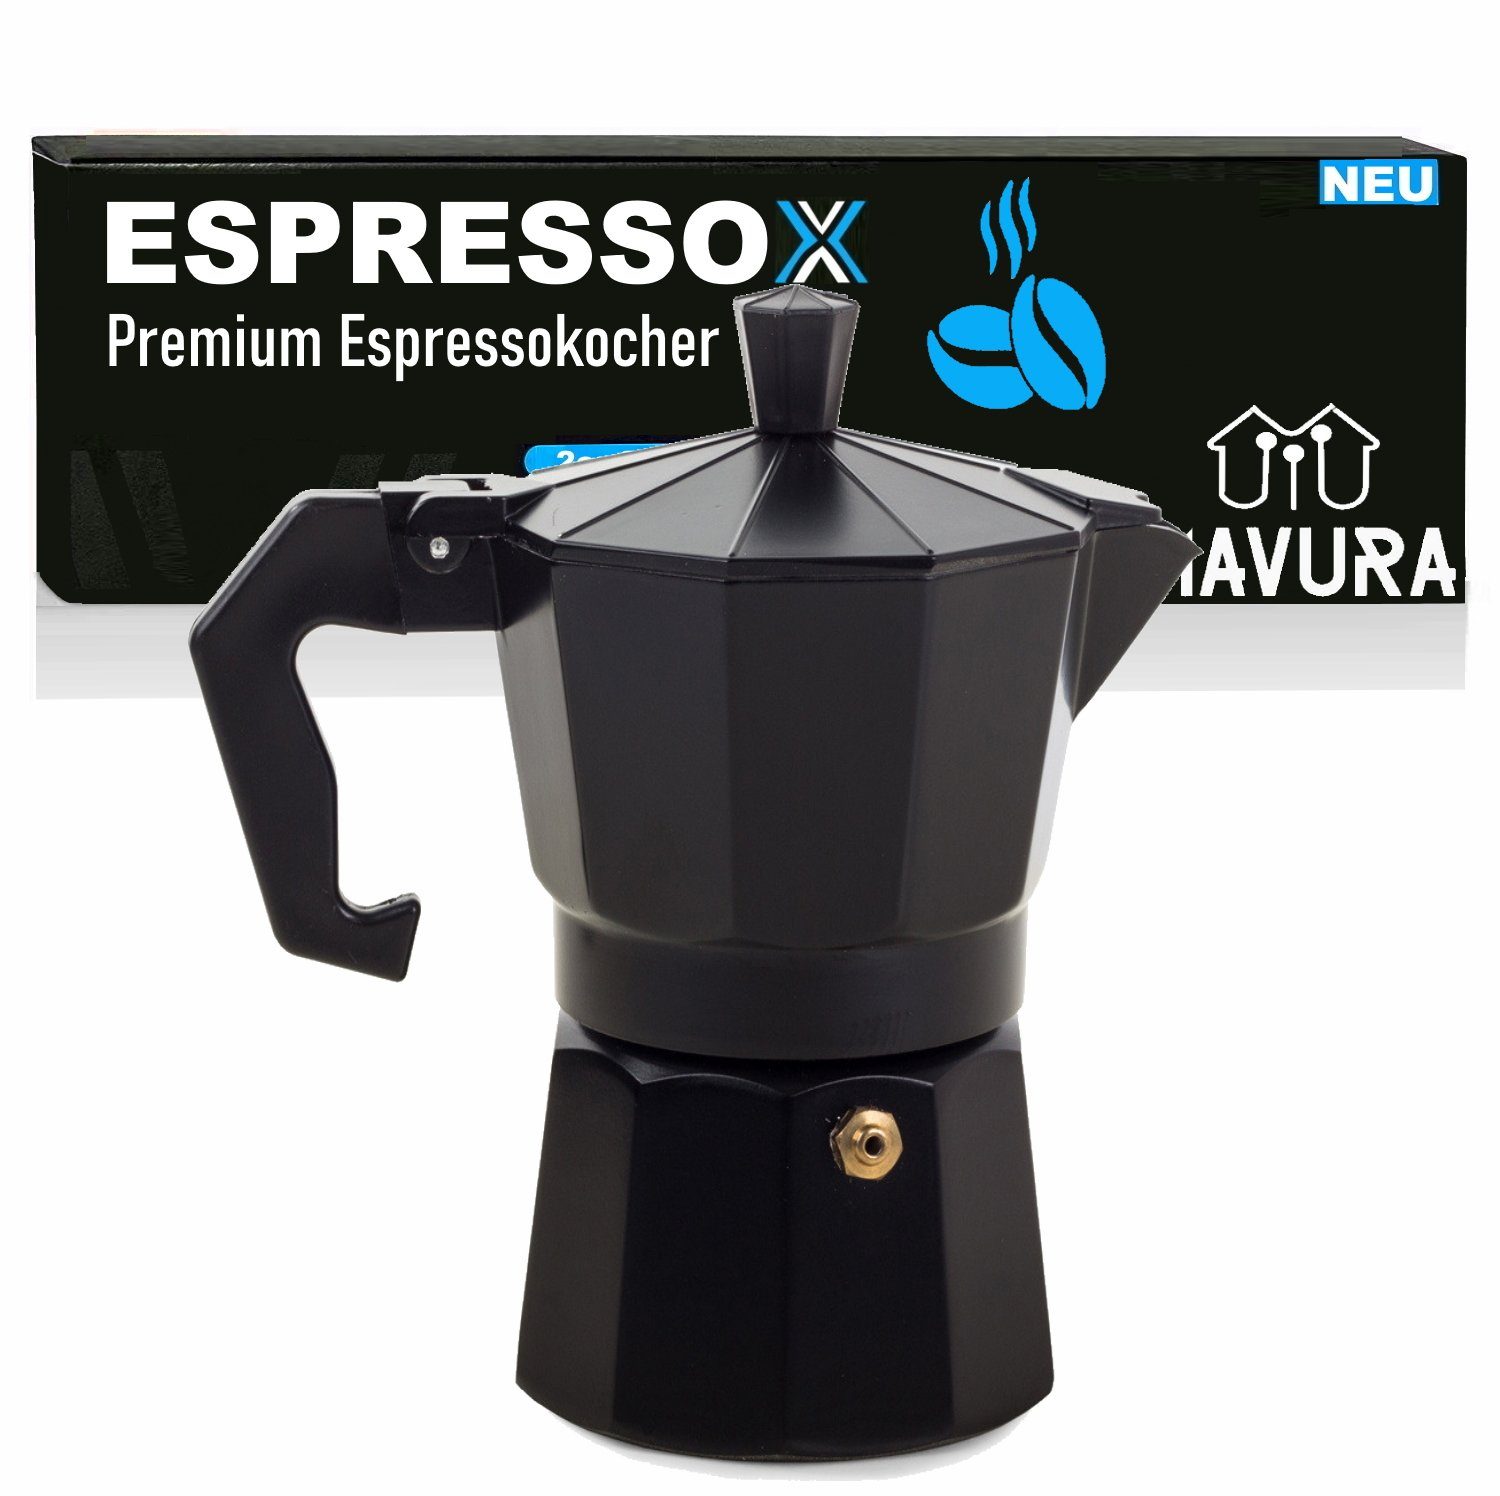 MAVURA Espressokocher ESPRESSOX Espresso Kocher Kaffeekocher Mokka Maker  Espressobereiter, Kaffeebereiter Espressokanne Mokkakocher Espressomaschine  3 Tassen online kaufen | OTTO